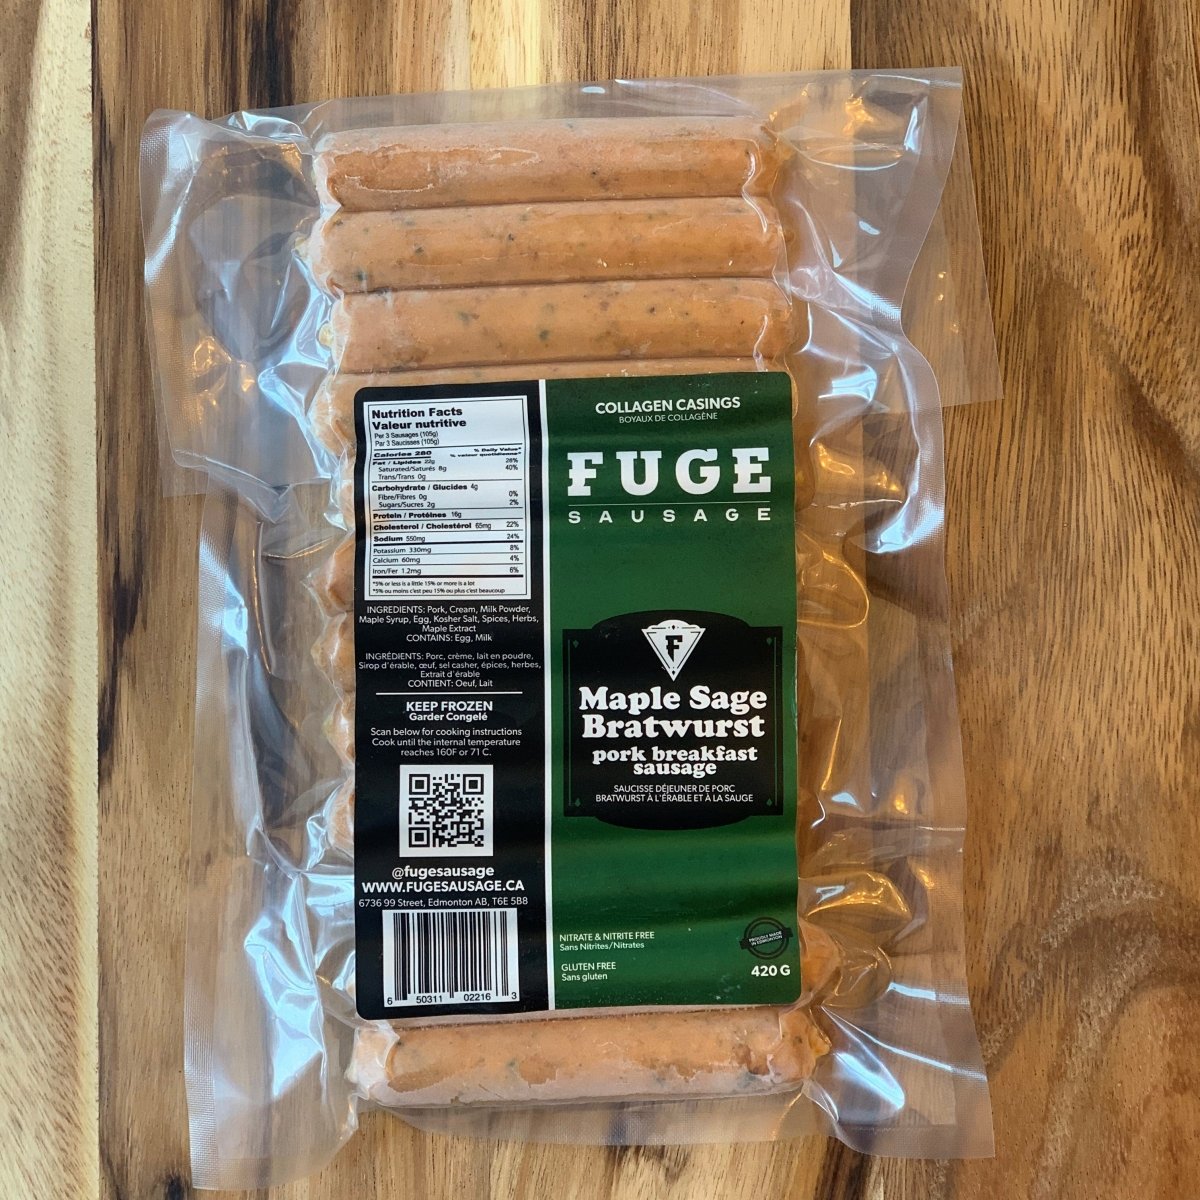 Maple Sage Pork Breakfast Sausage 420g - Oonnie - Fuge Sausage